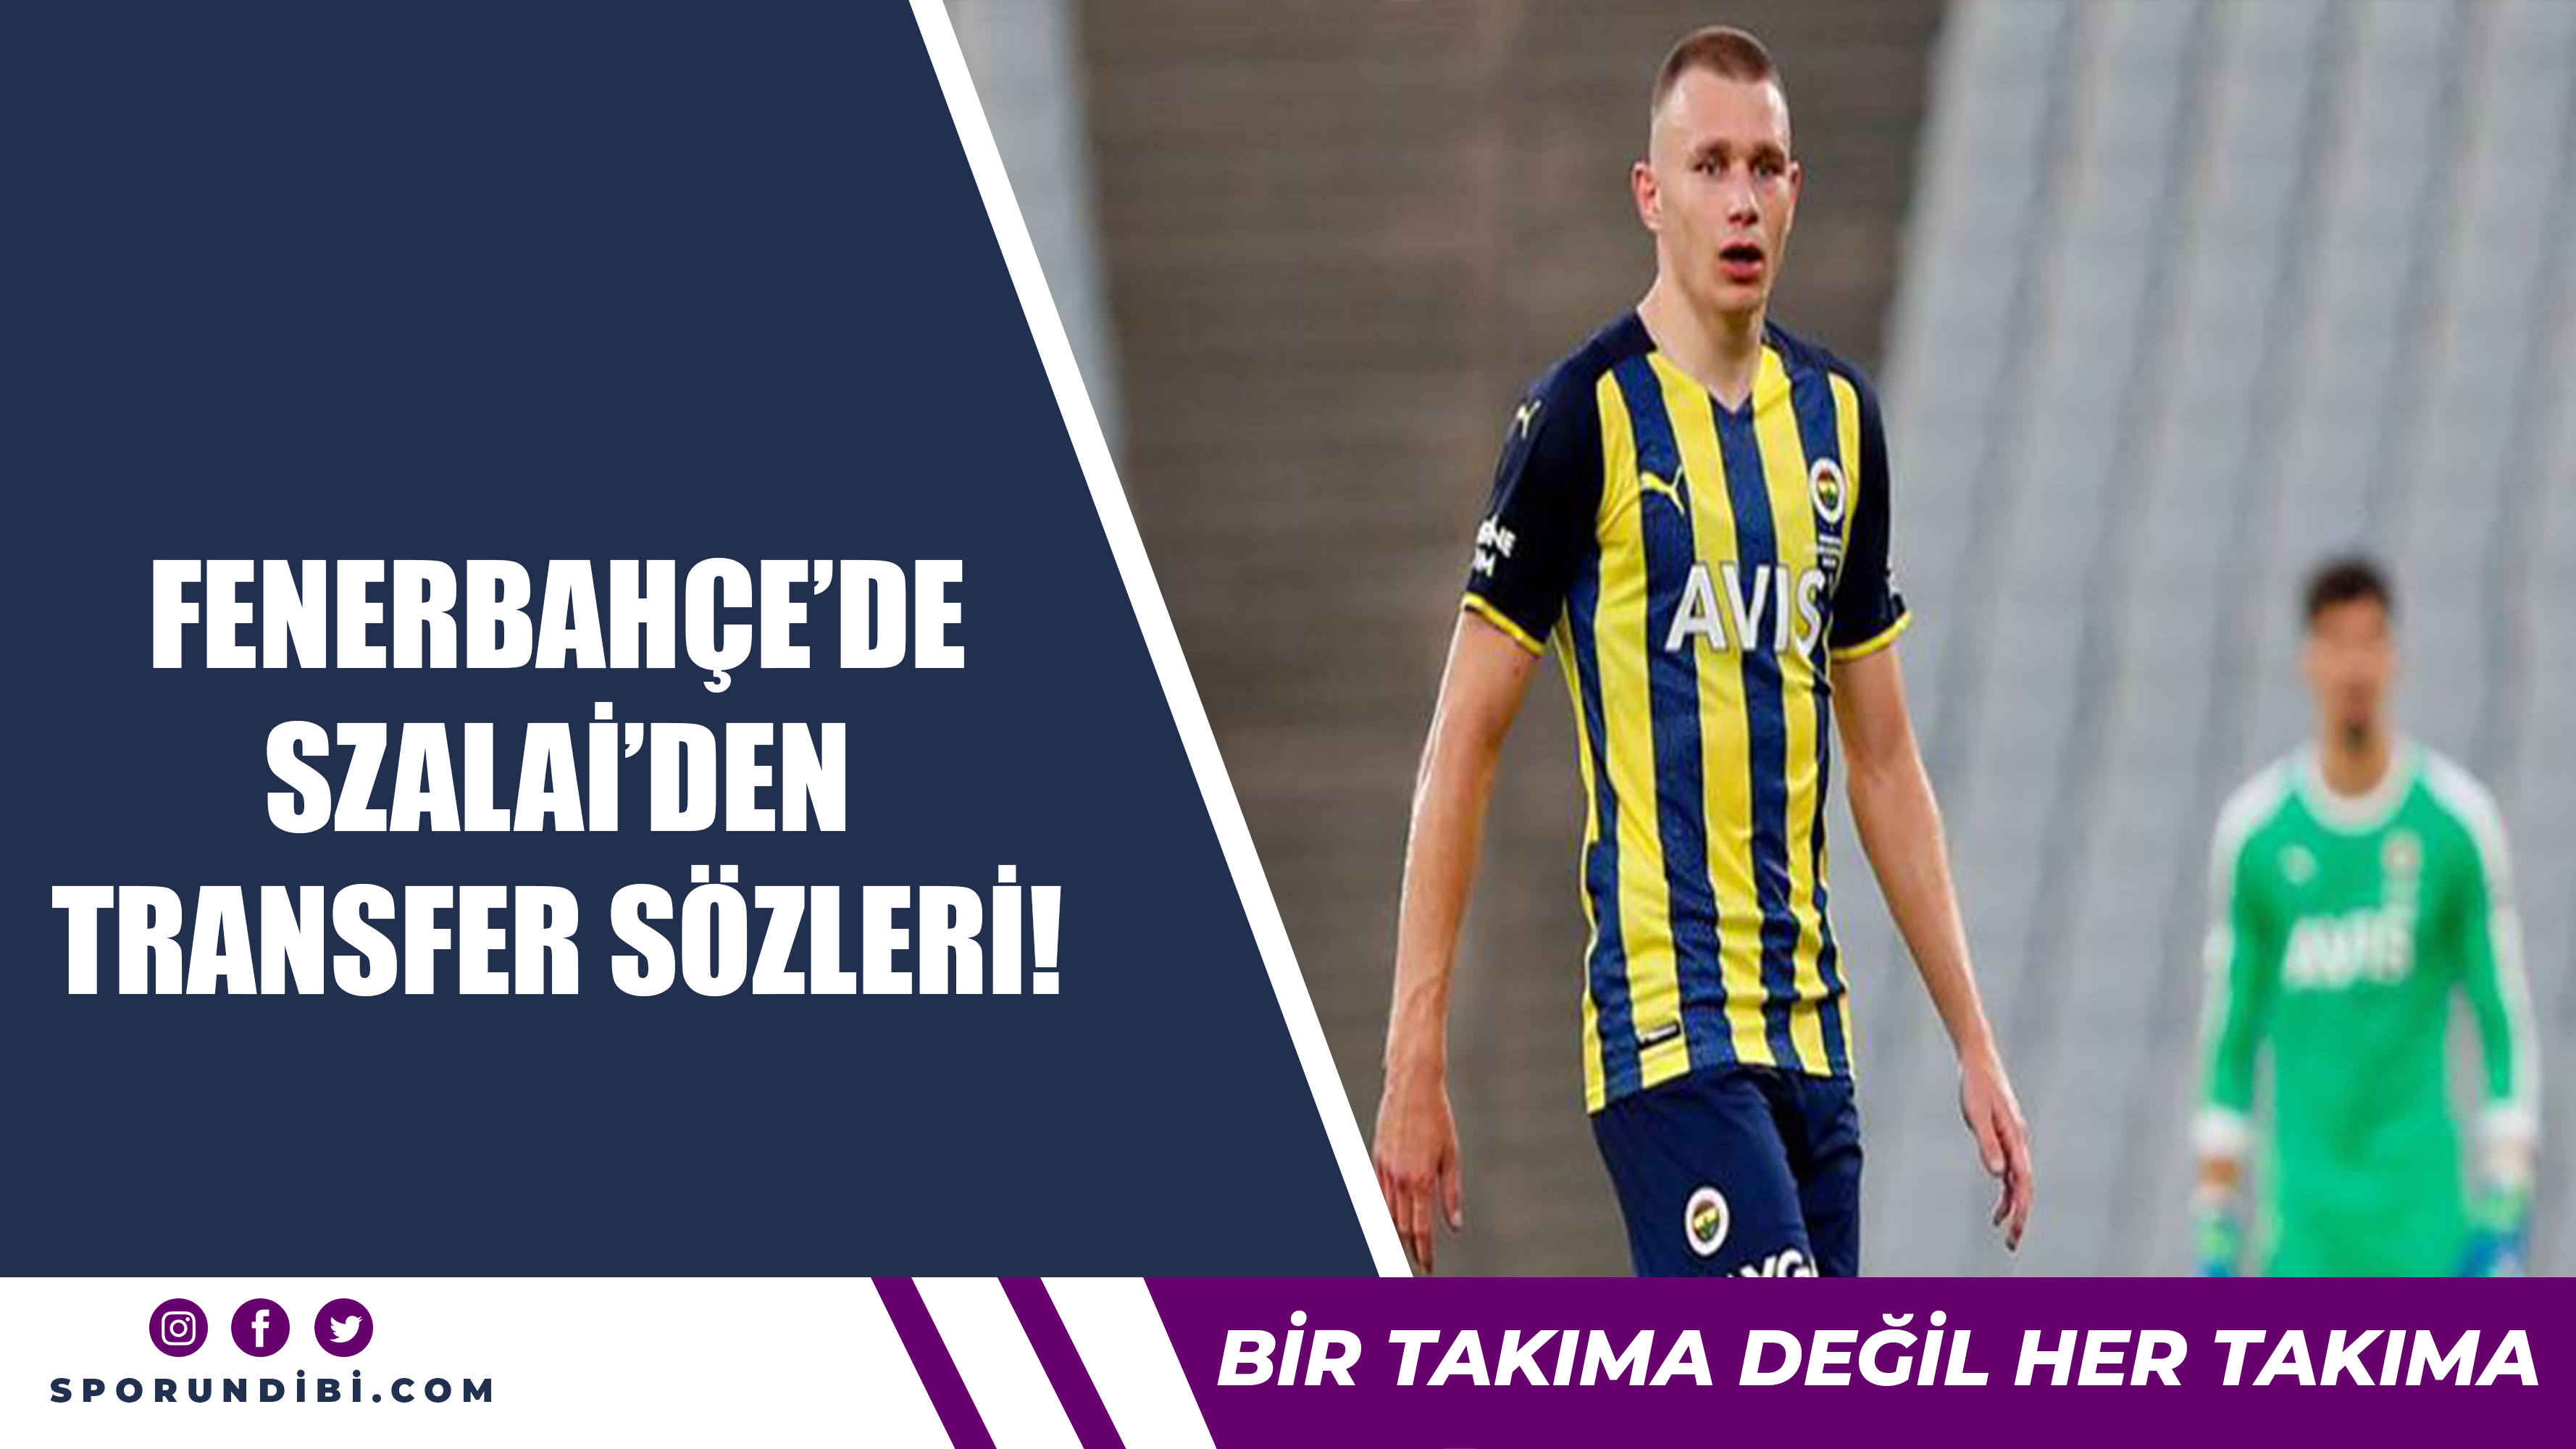 Fenerbahçe'de Szalai'den transfer sözleri!